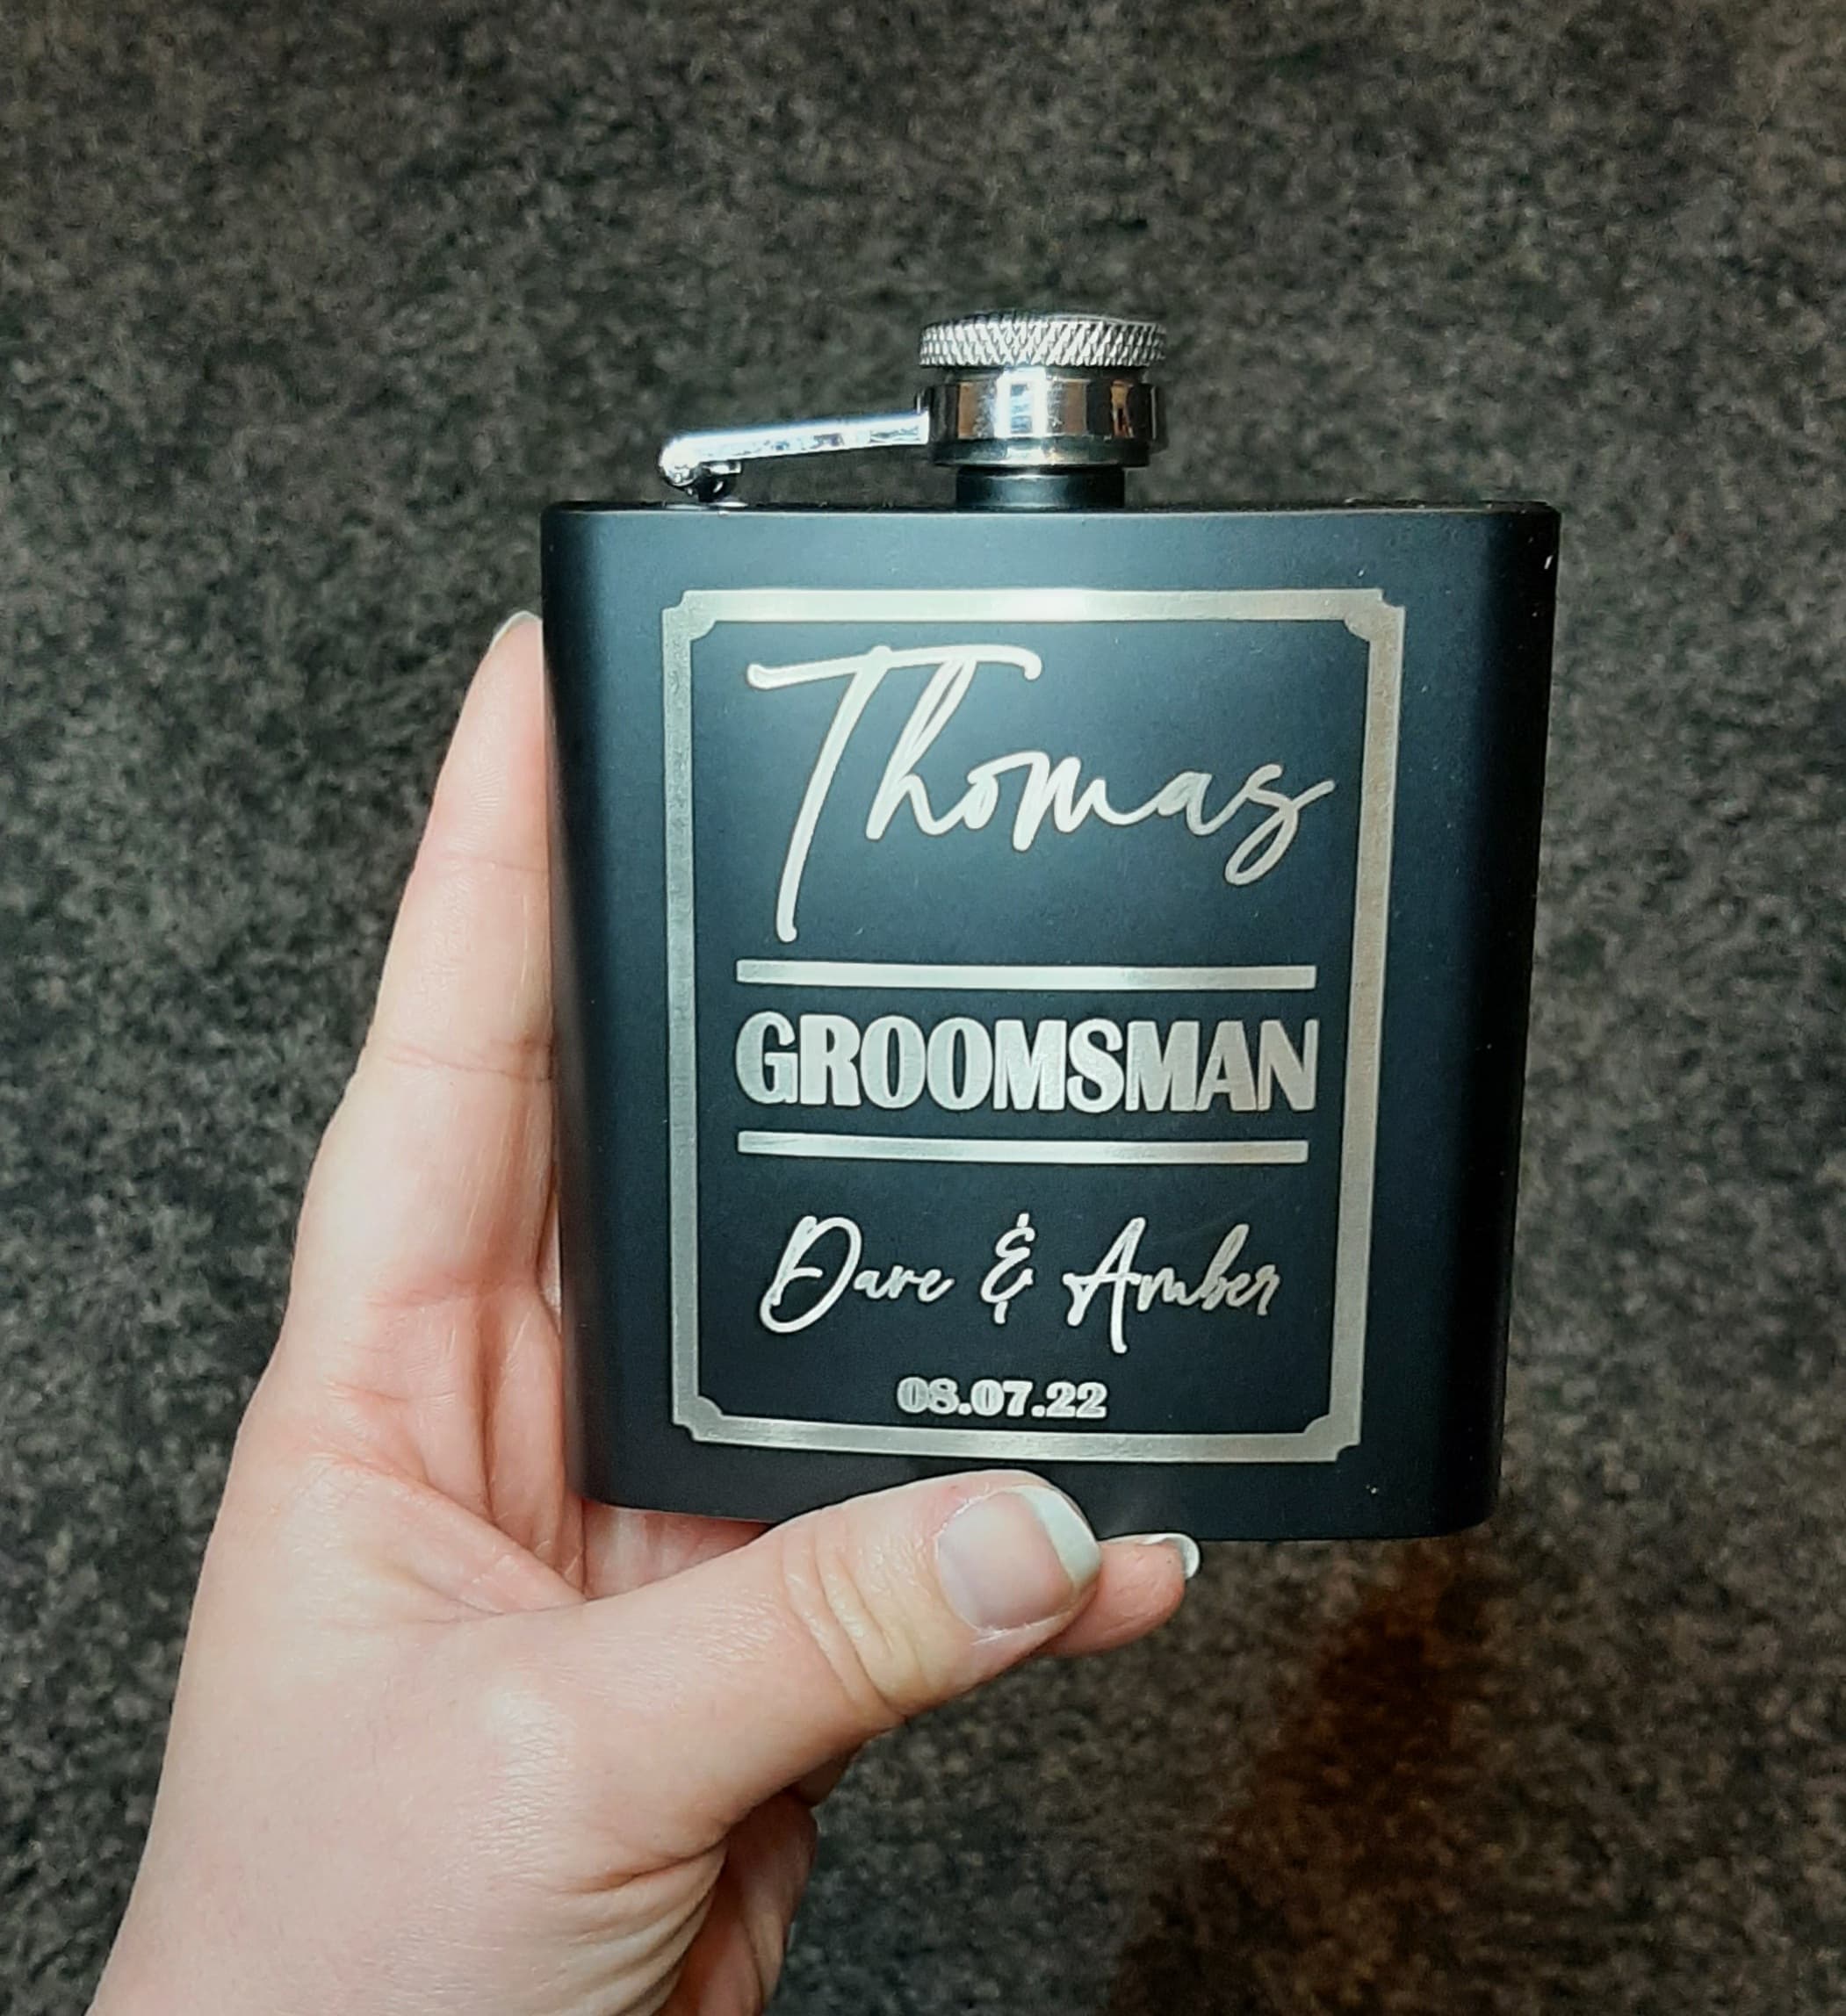 Wedding hip flask set in hand with groomsman personalisation